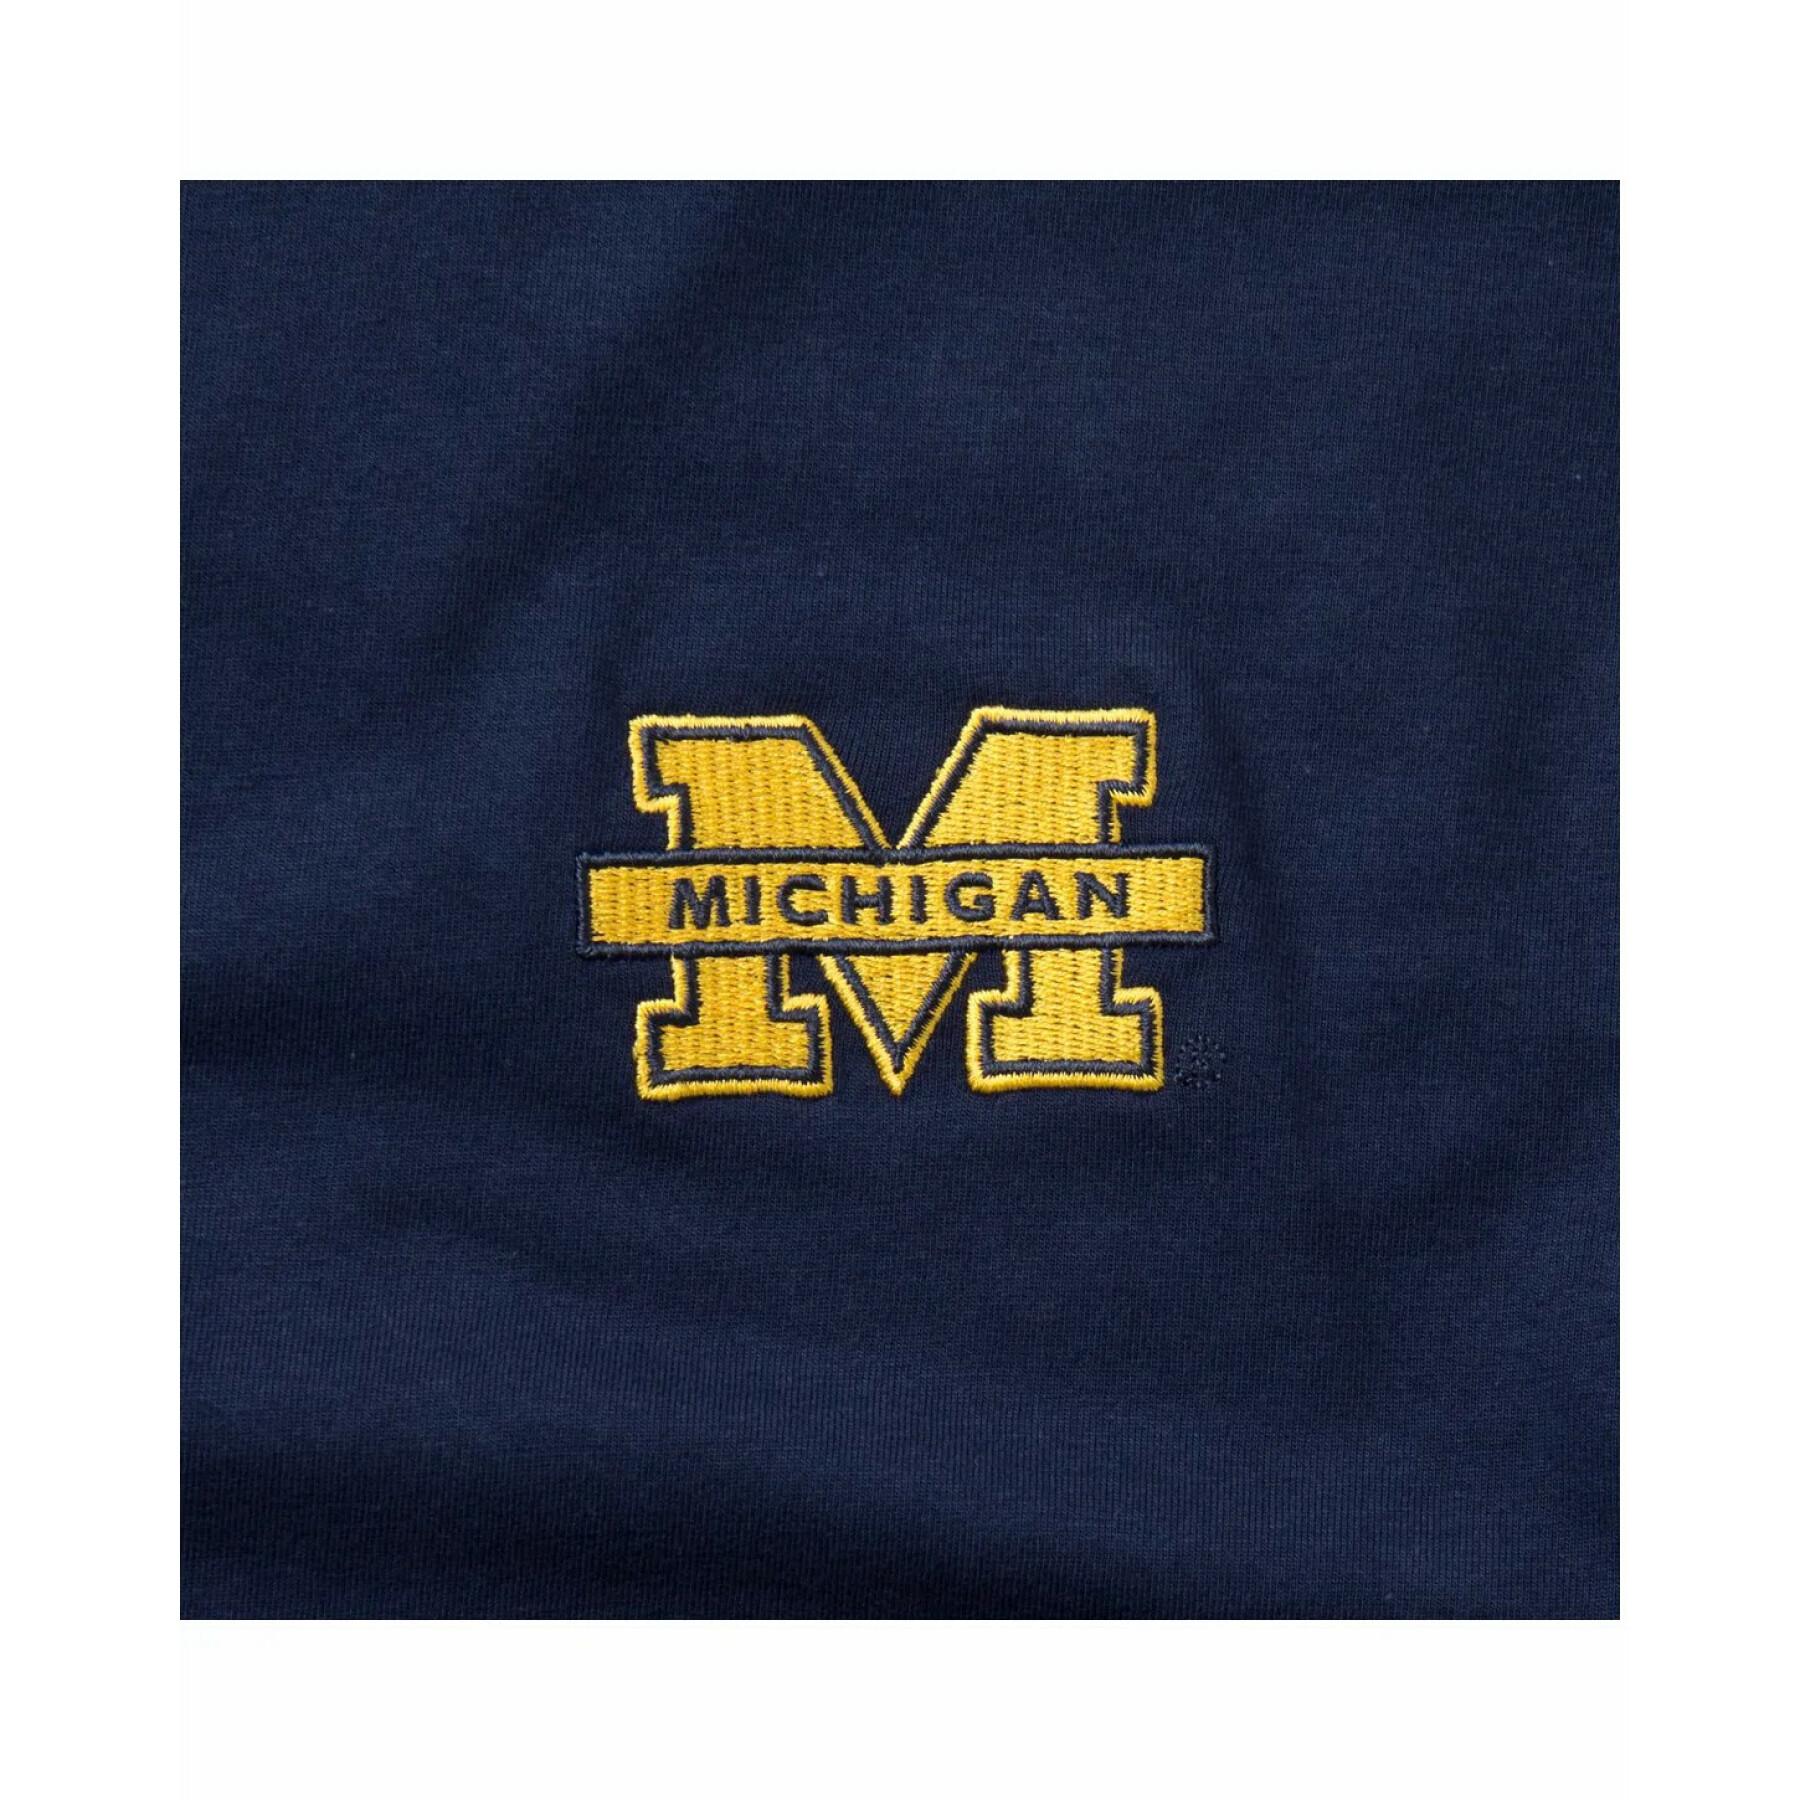 Camiseta Universidad de Michigan logo bordado